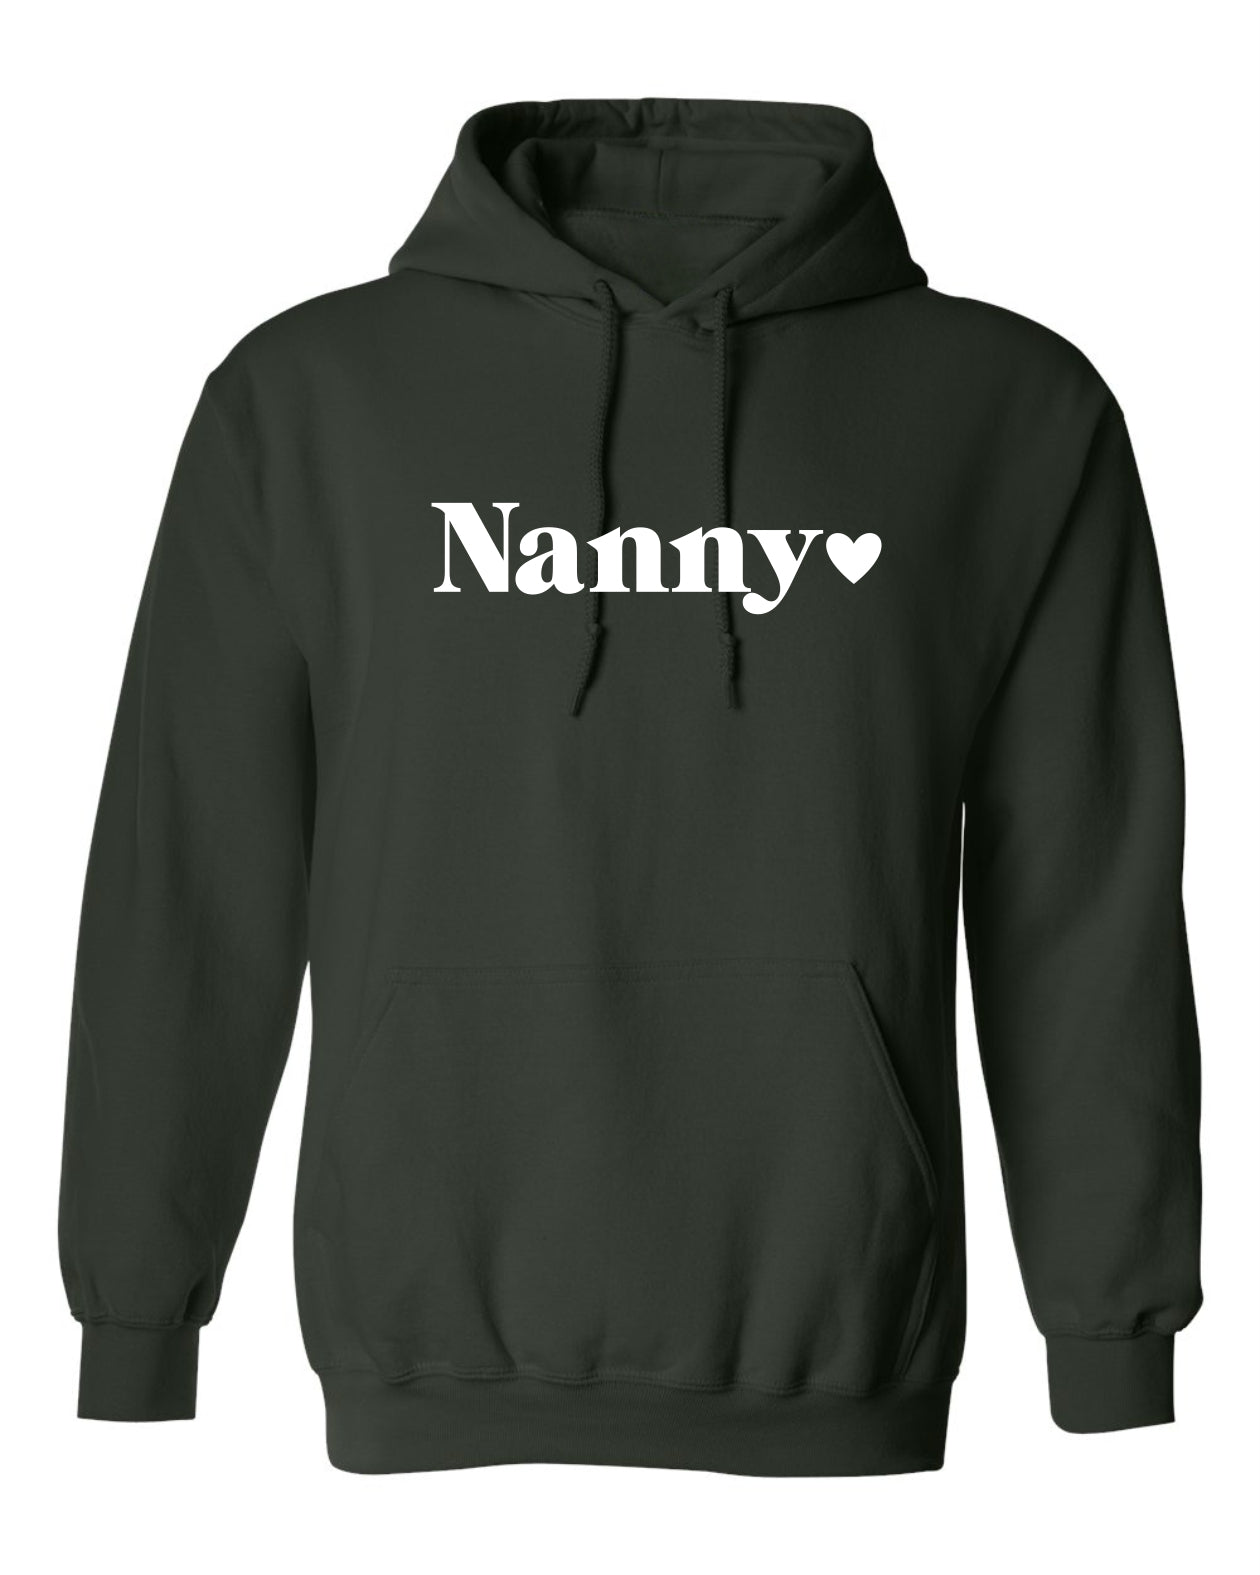 "Nanny" Heart Unisex Hoodie